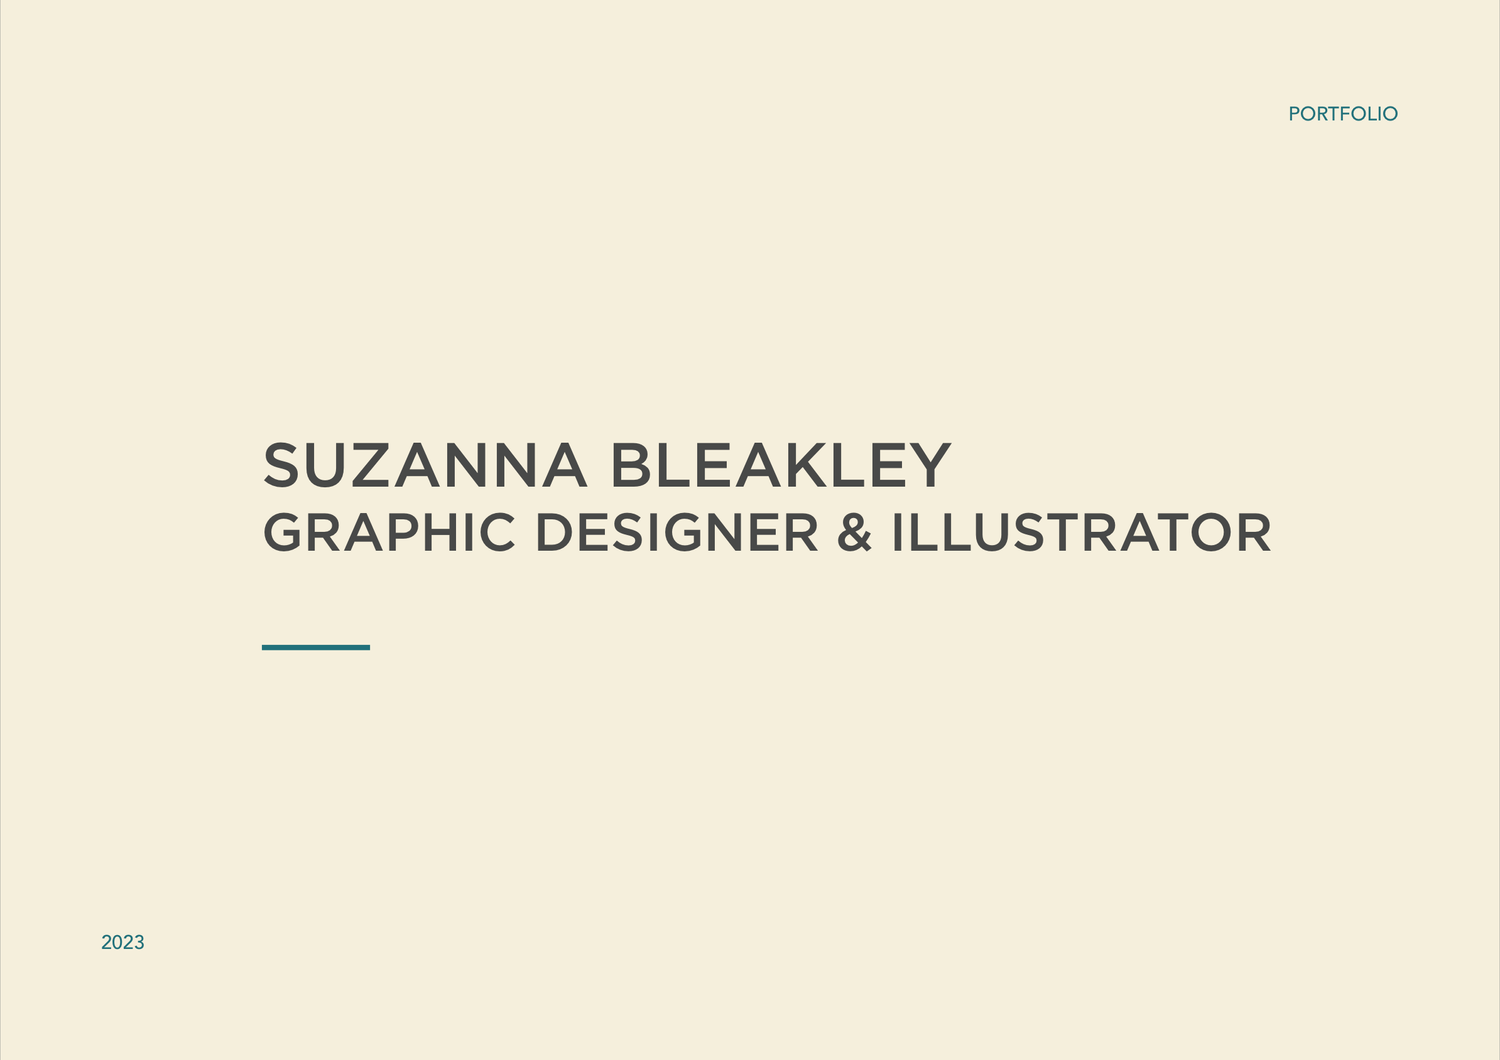 SUZANNA BLEAKLEY
GRAPHIC DESIGNER & ILLUSTRATOR

2023